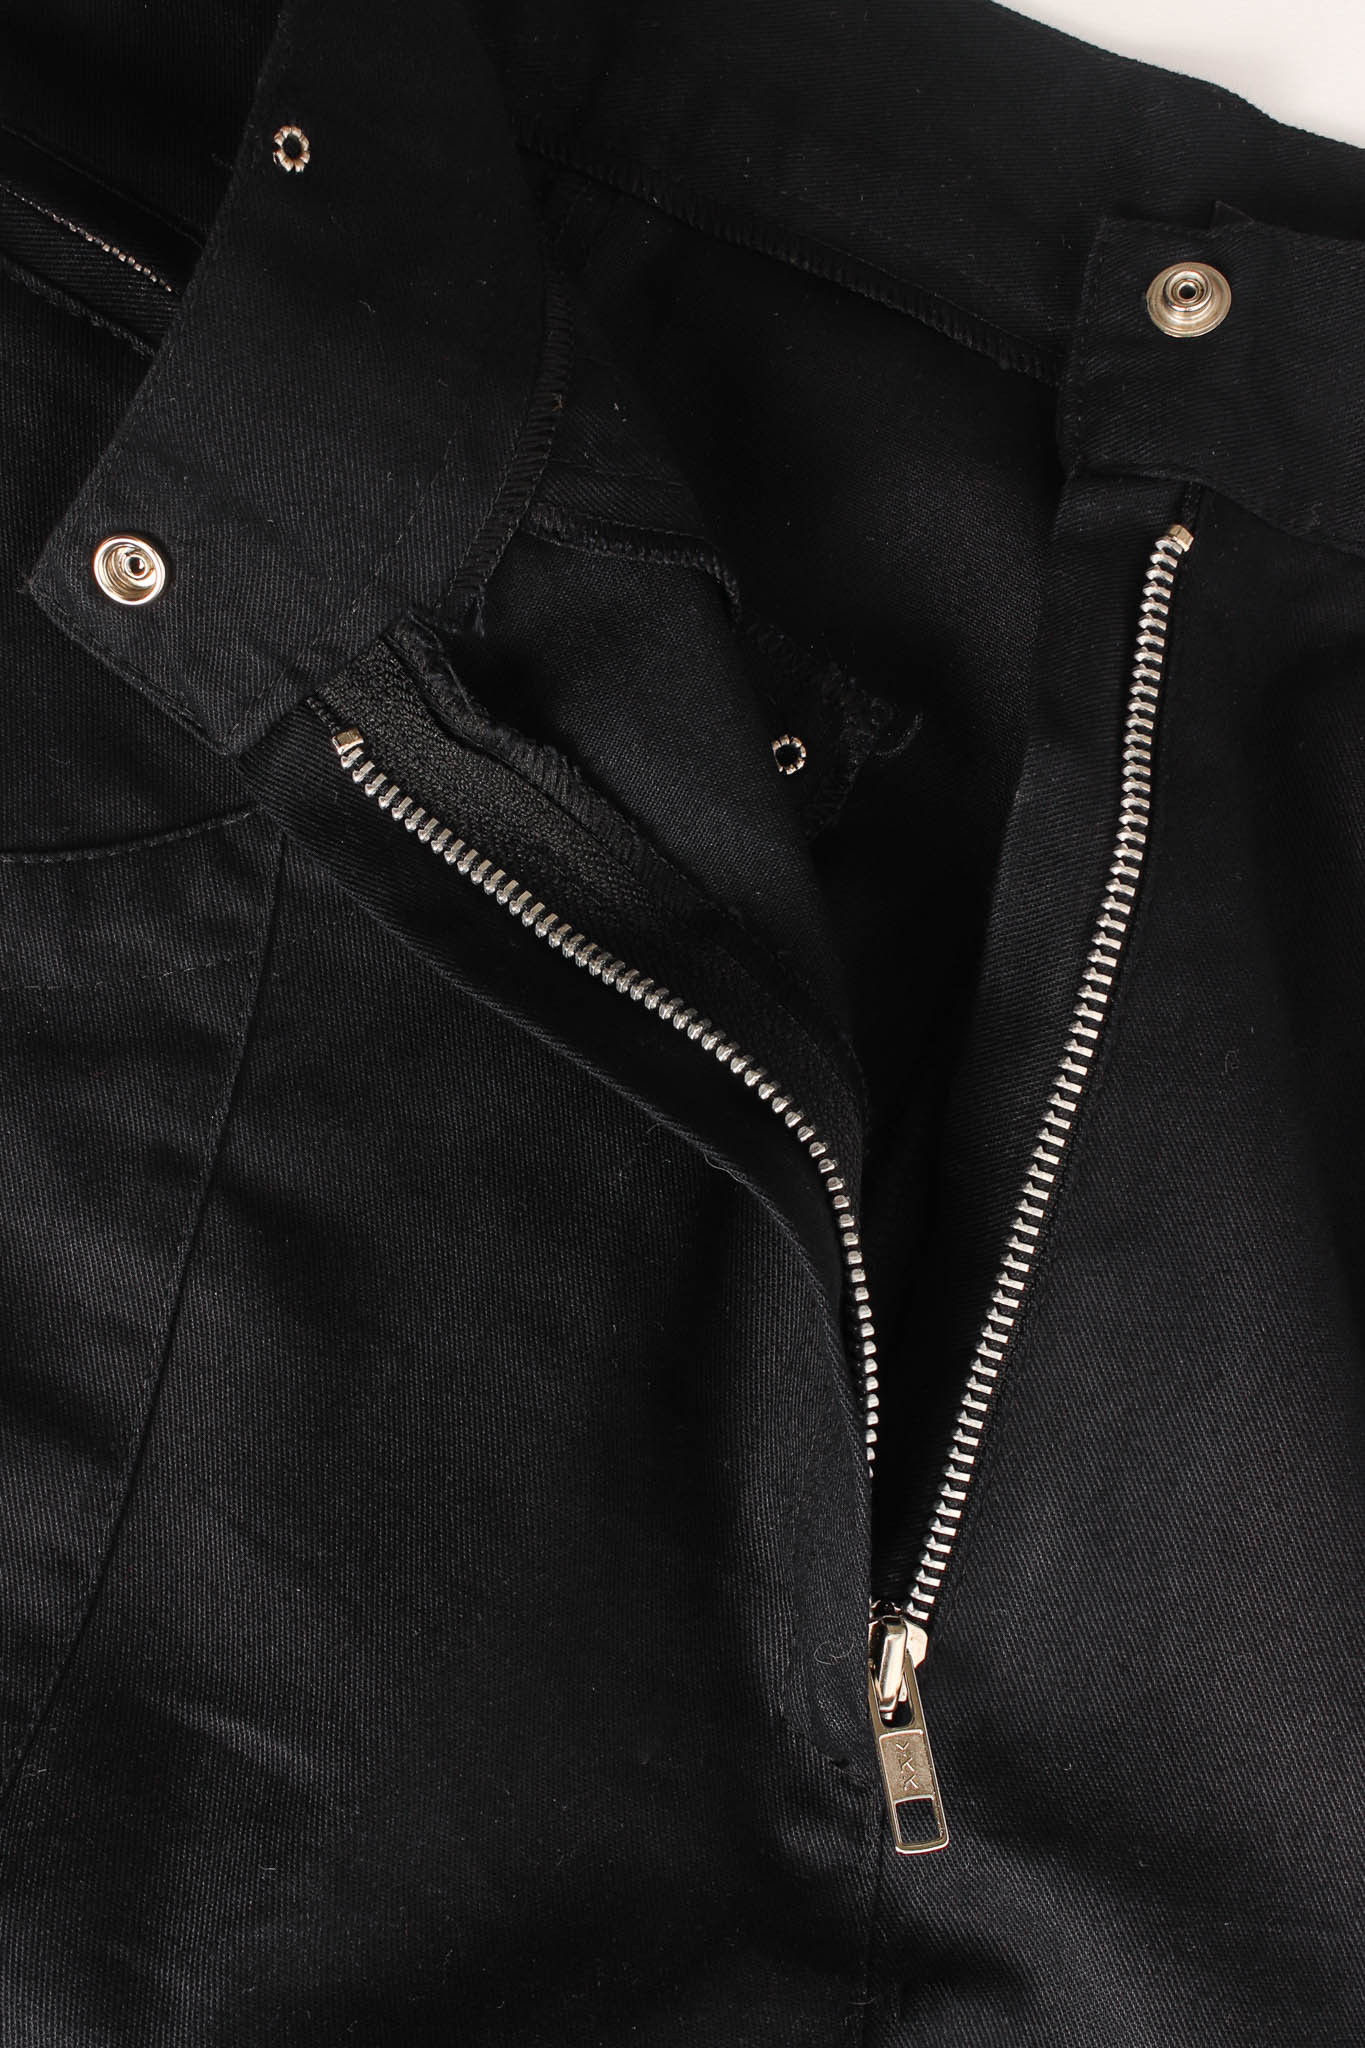 Vintage La Milliardaire Studded Fringe Panel Pant zipper opening @ Recess LA